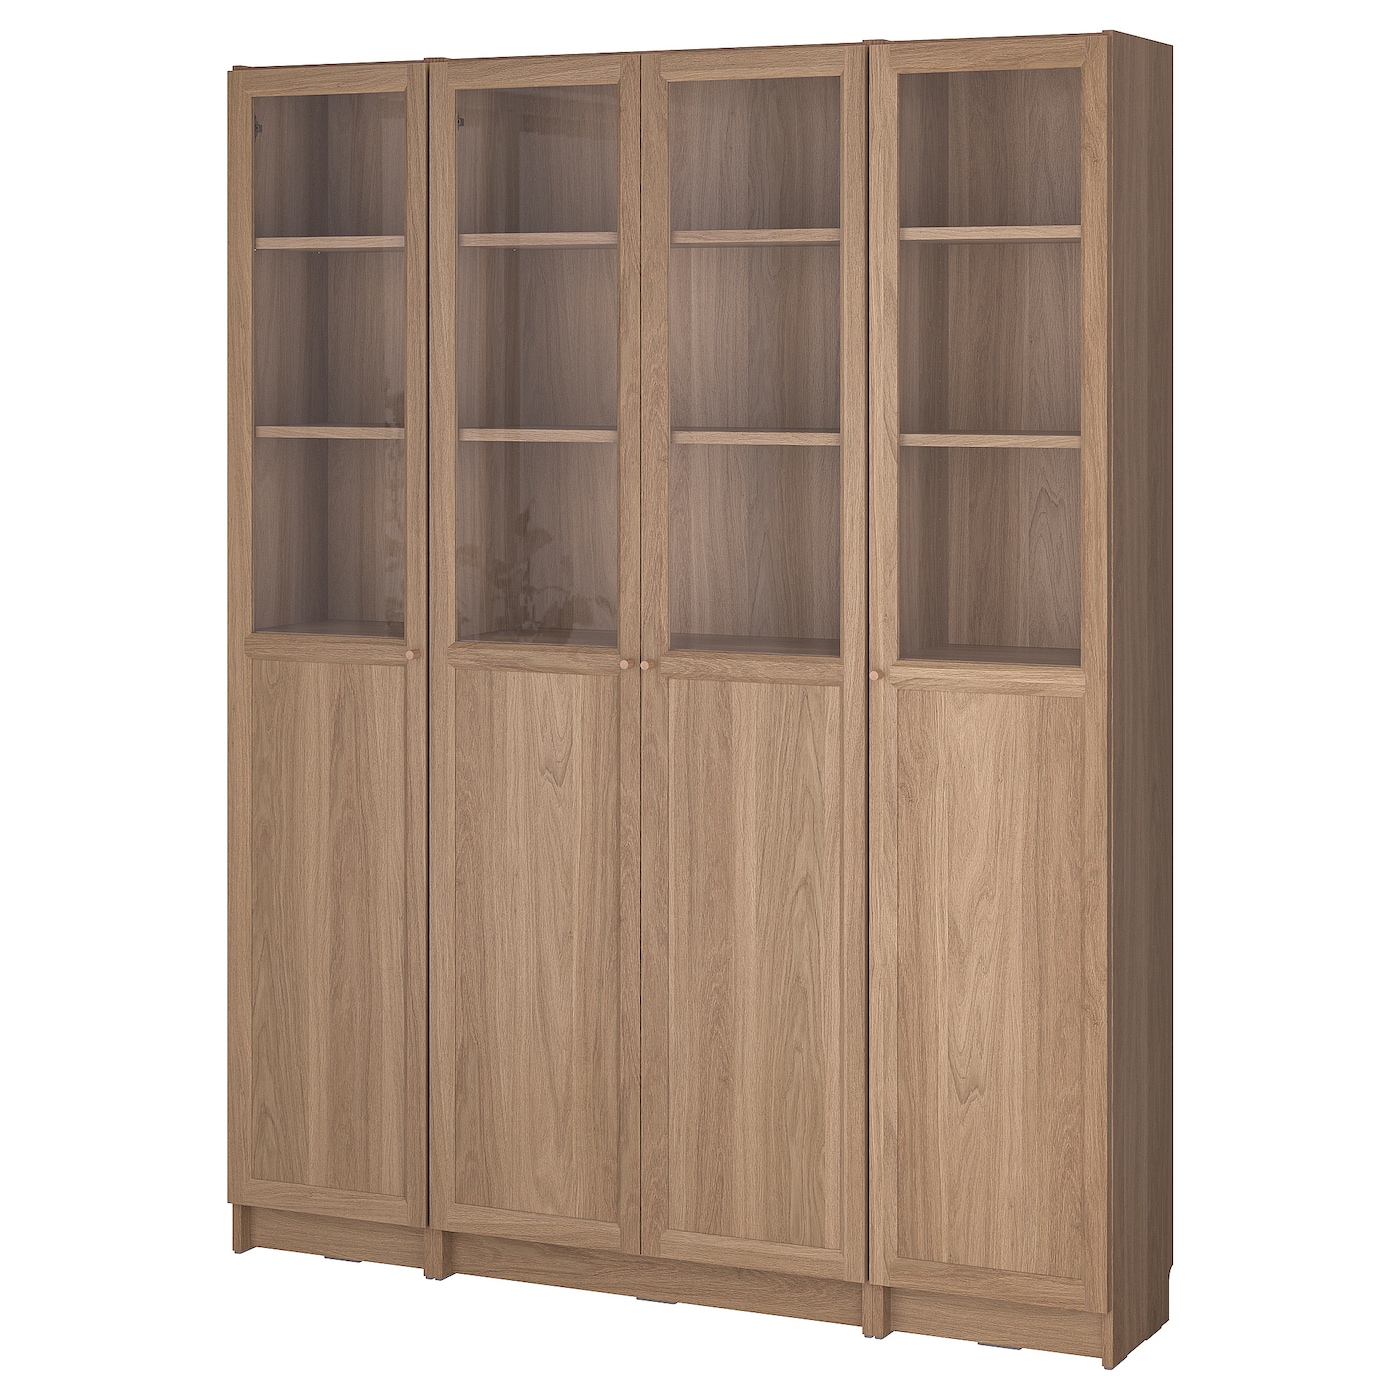 Книжный шкаф -  BILLY / OXBERG IKEA/ БИЛЛИ/ ОКСБЕРГ ИКЕА, 160х202 см,  под беленый дуб